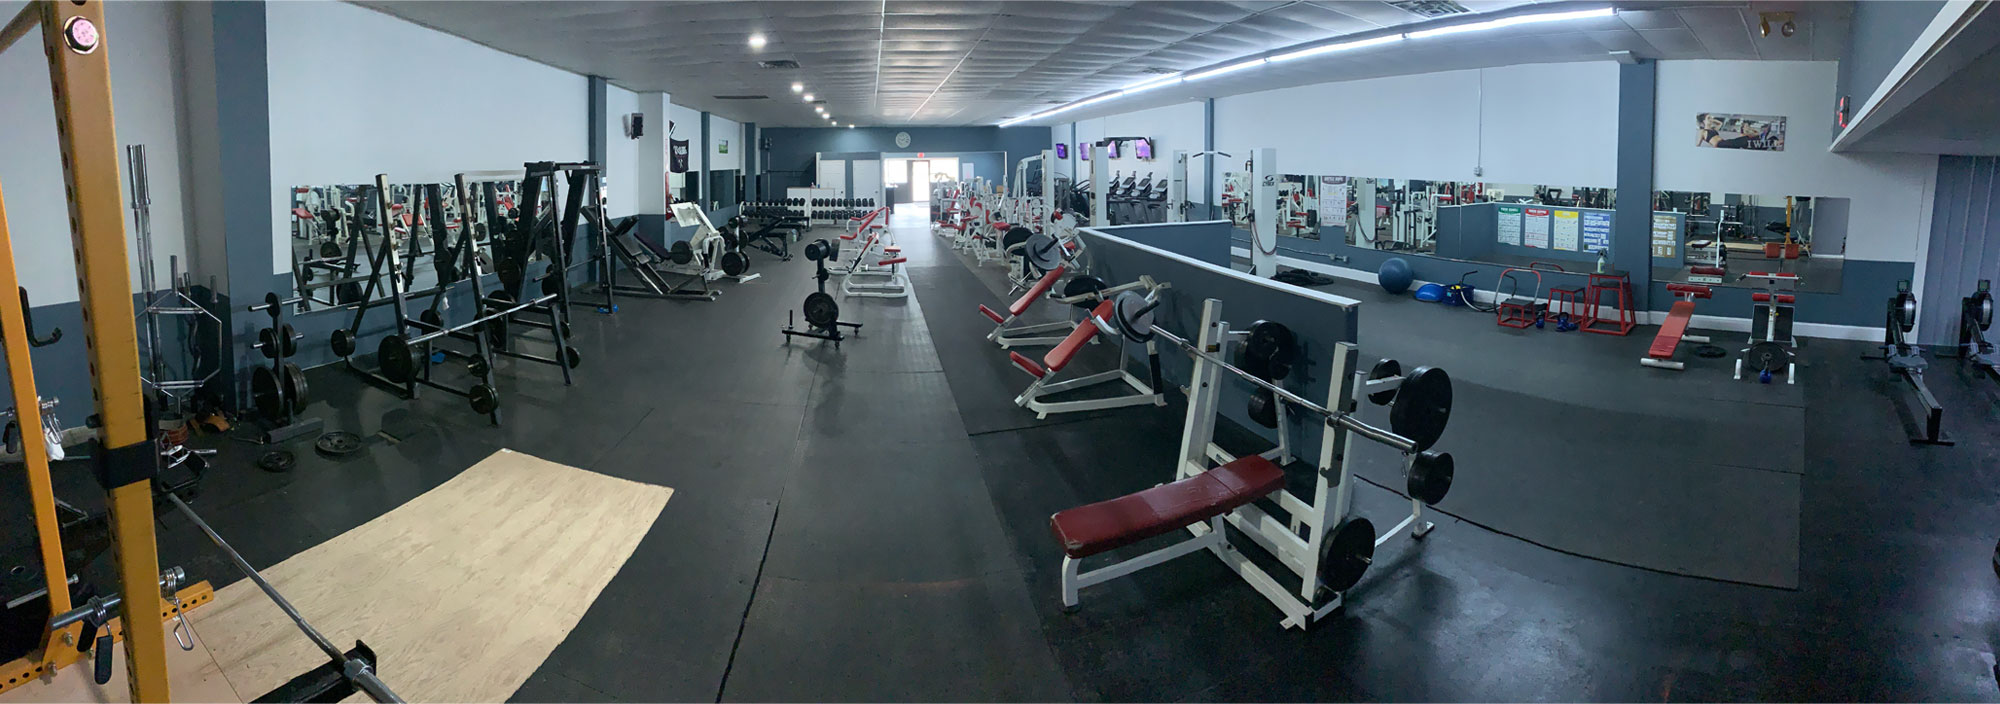 Omro Iron Fitness Gym